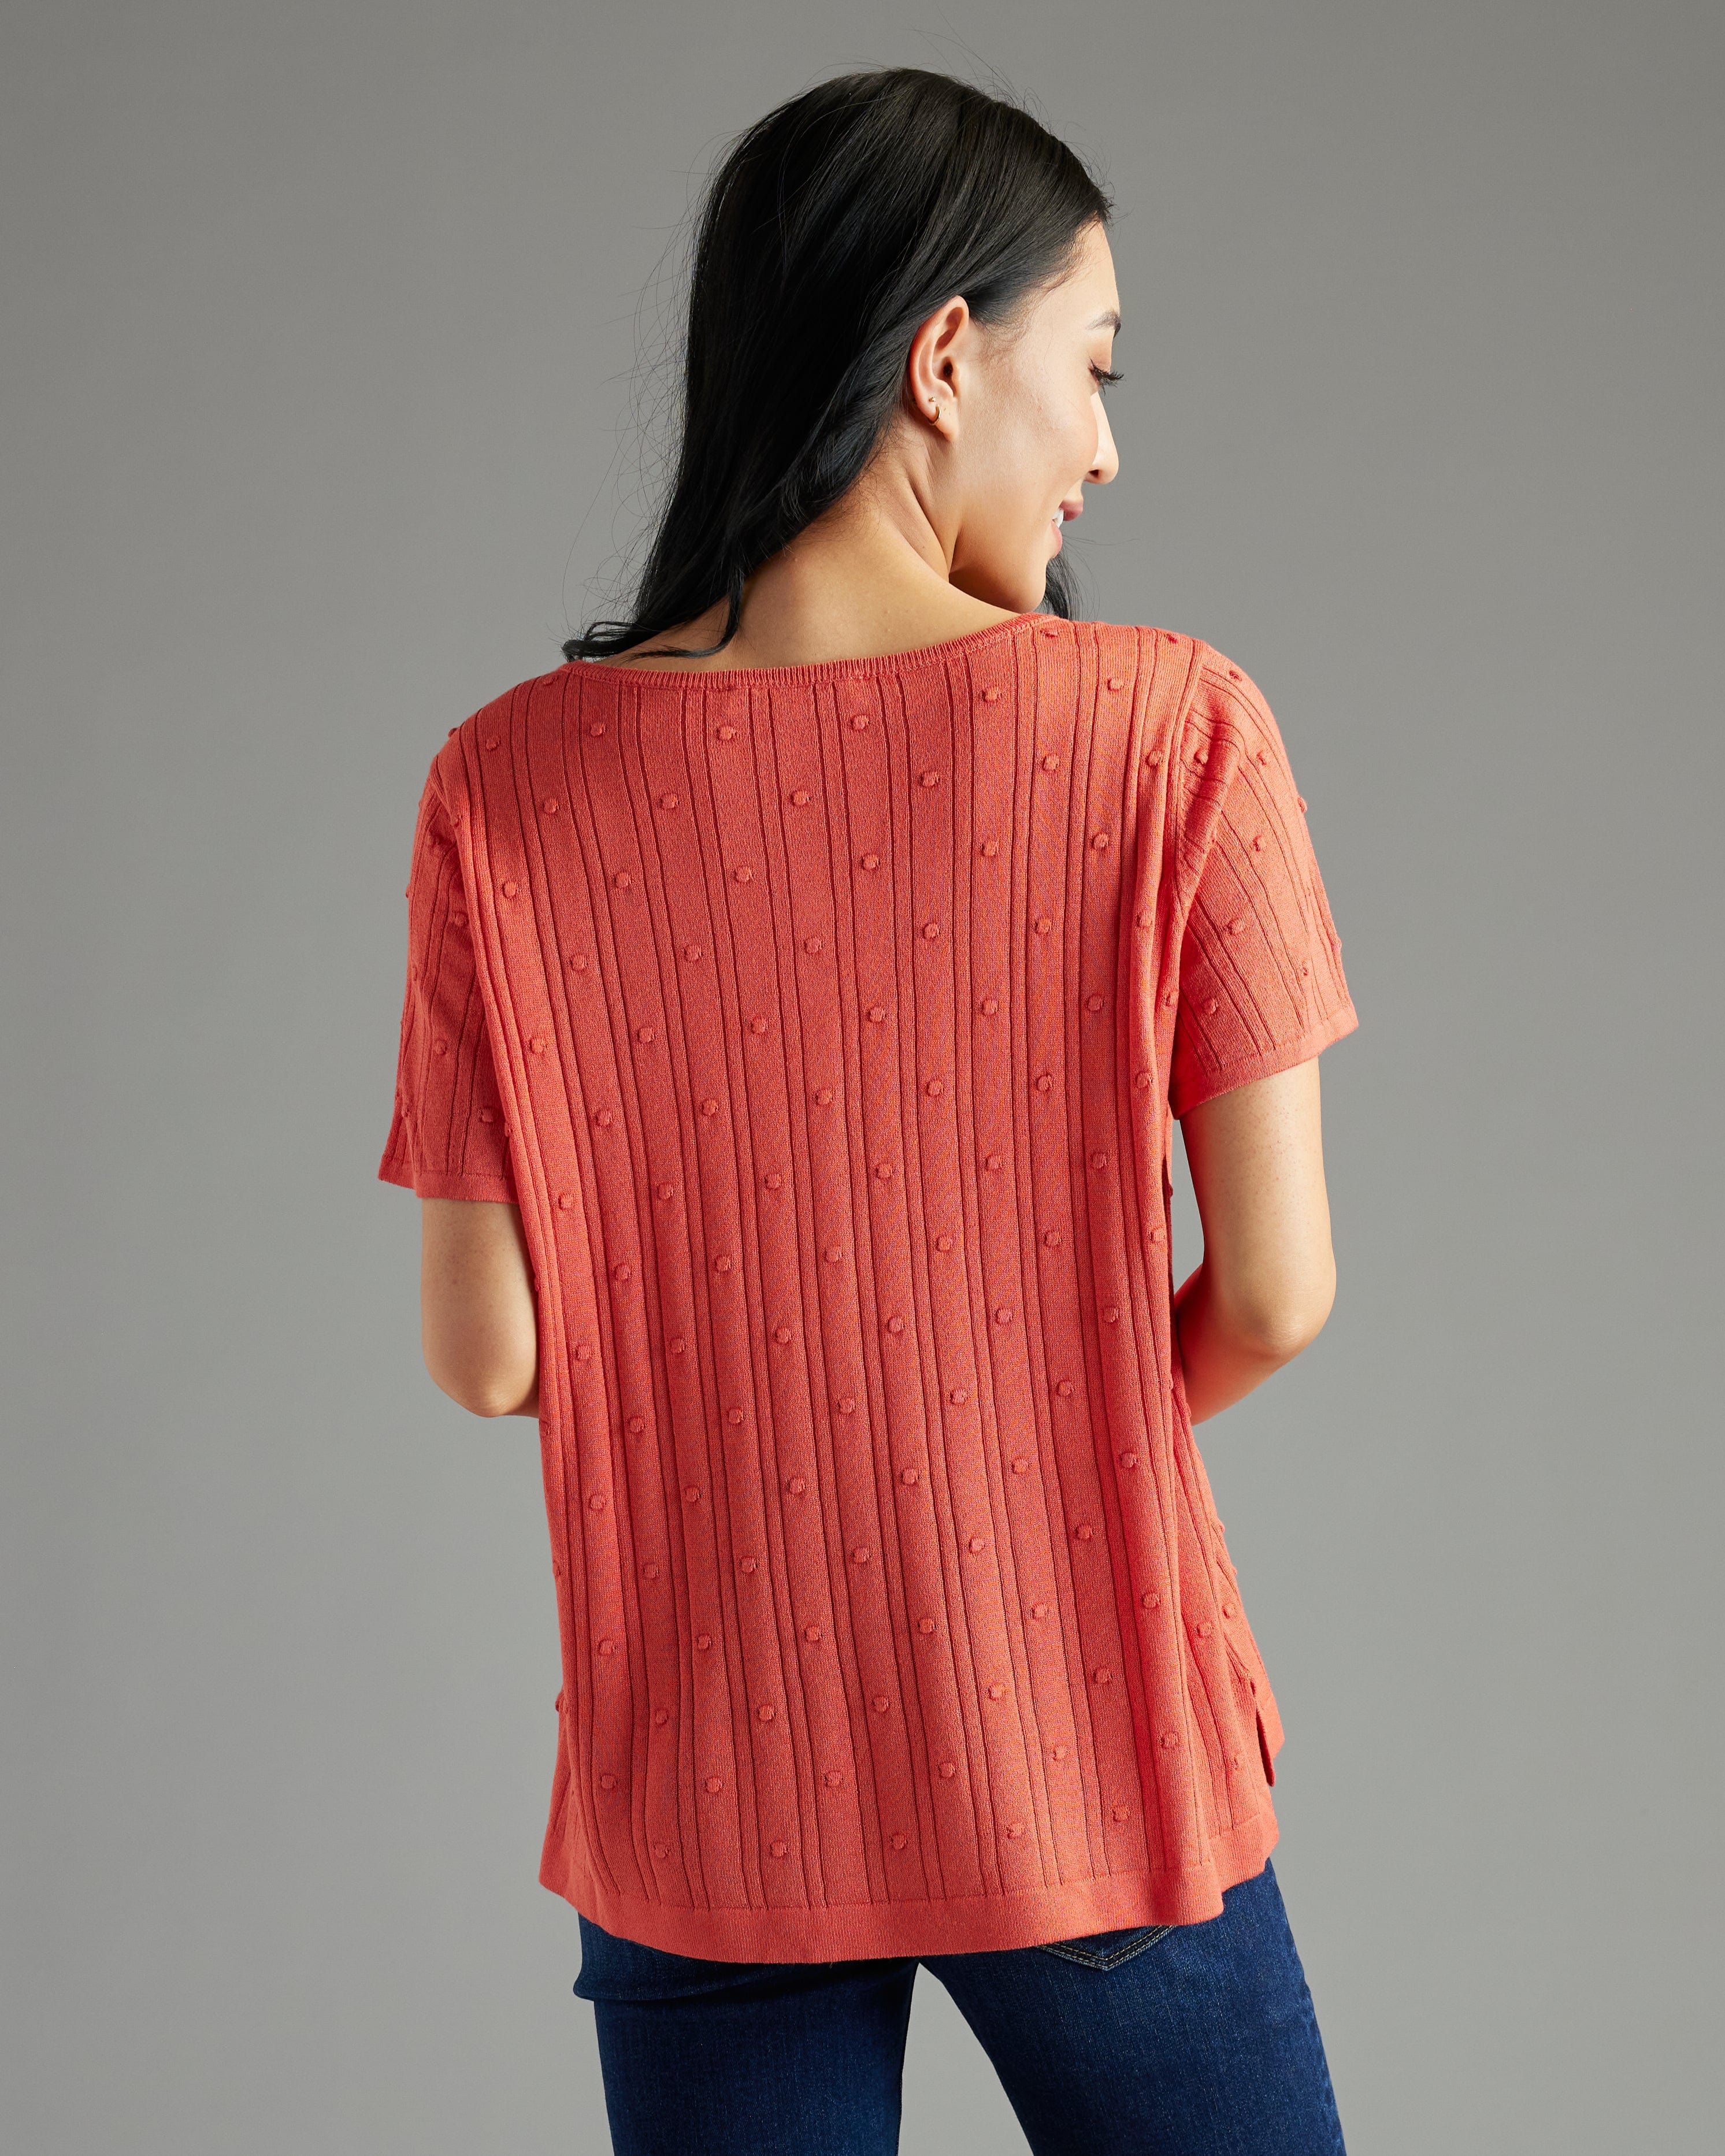 Woman in orange short sleeve textured sweater